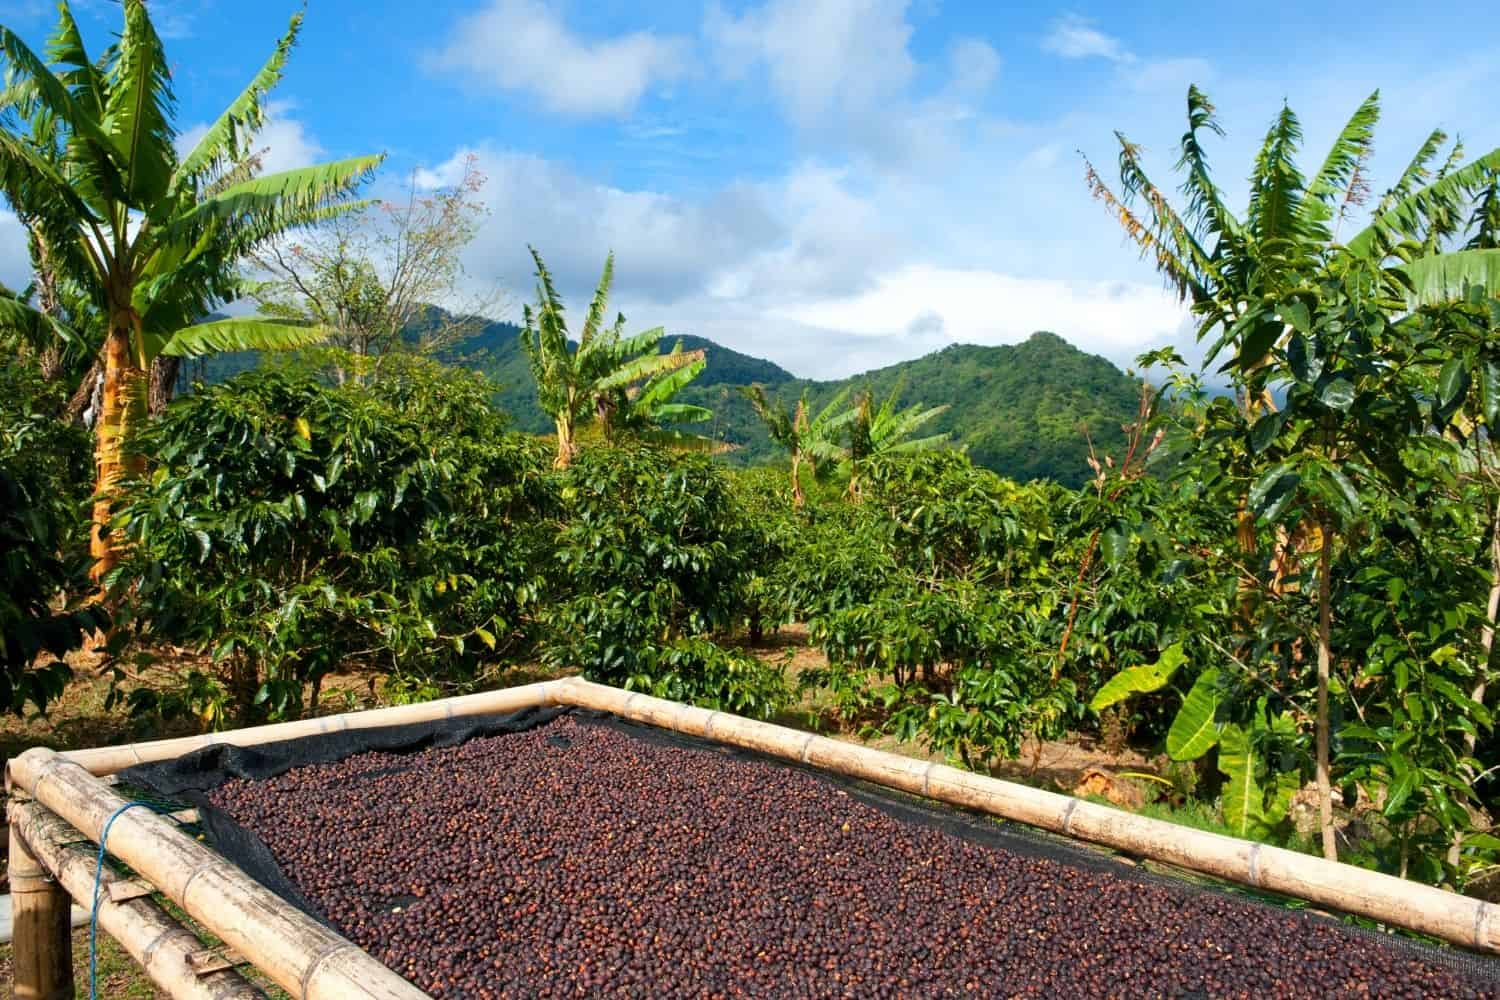 coffee plantation in central america.